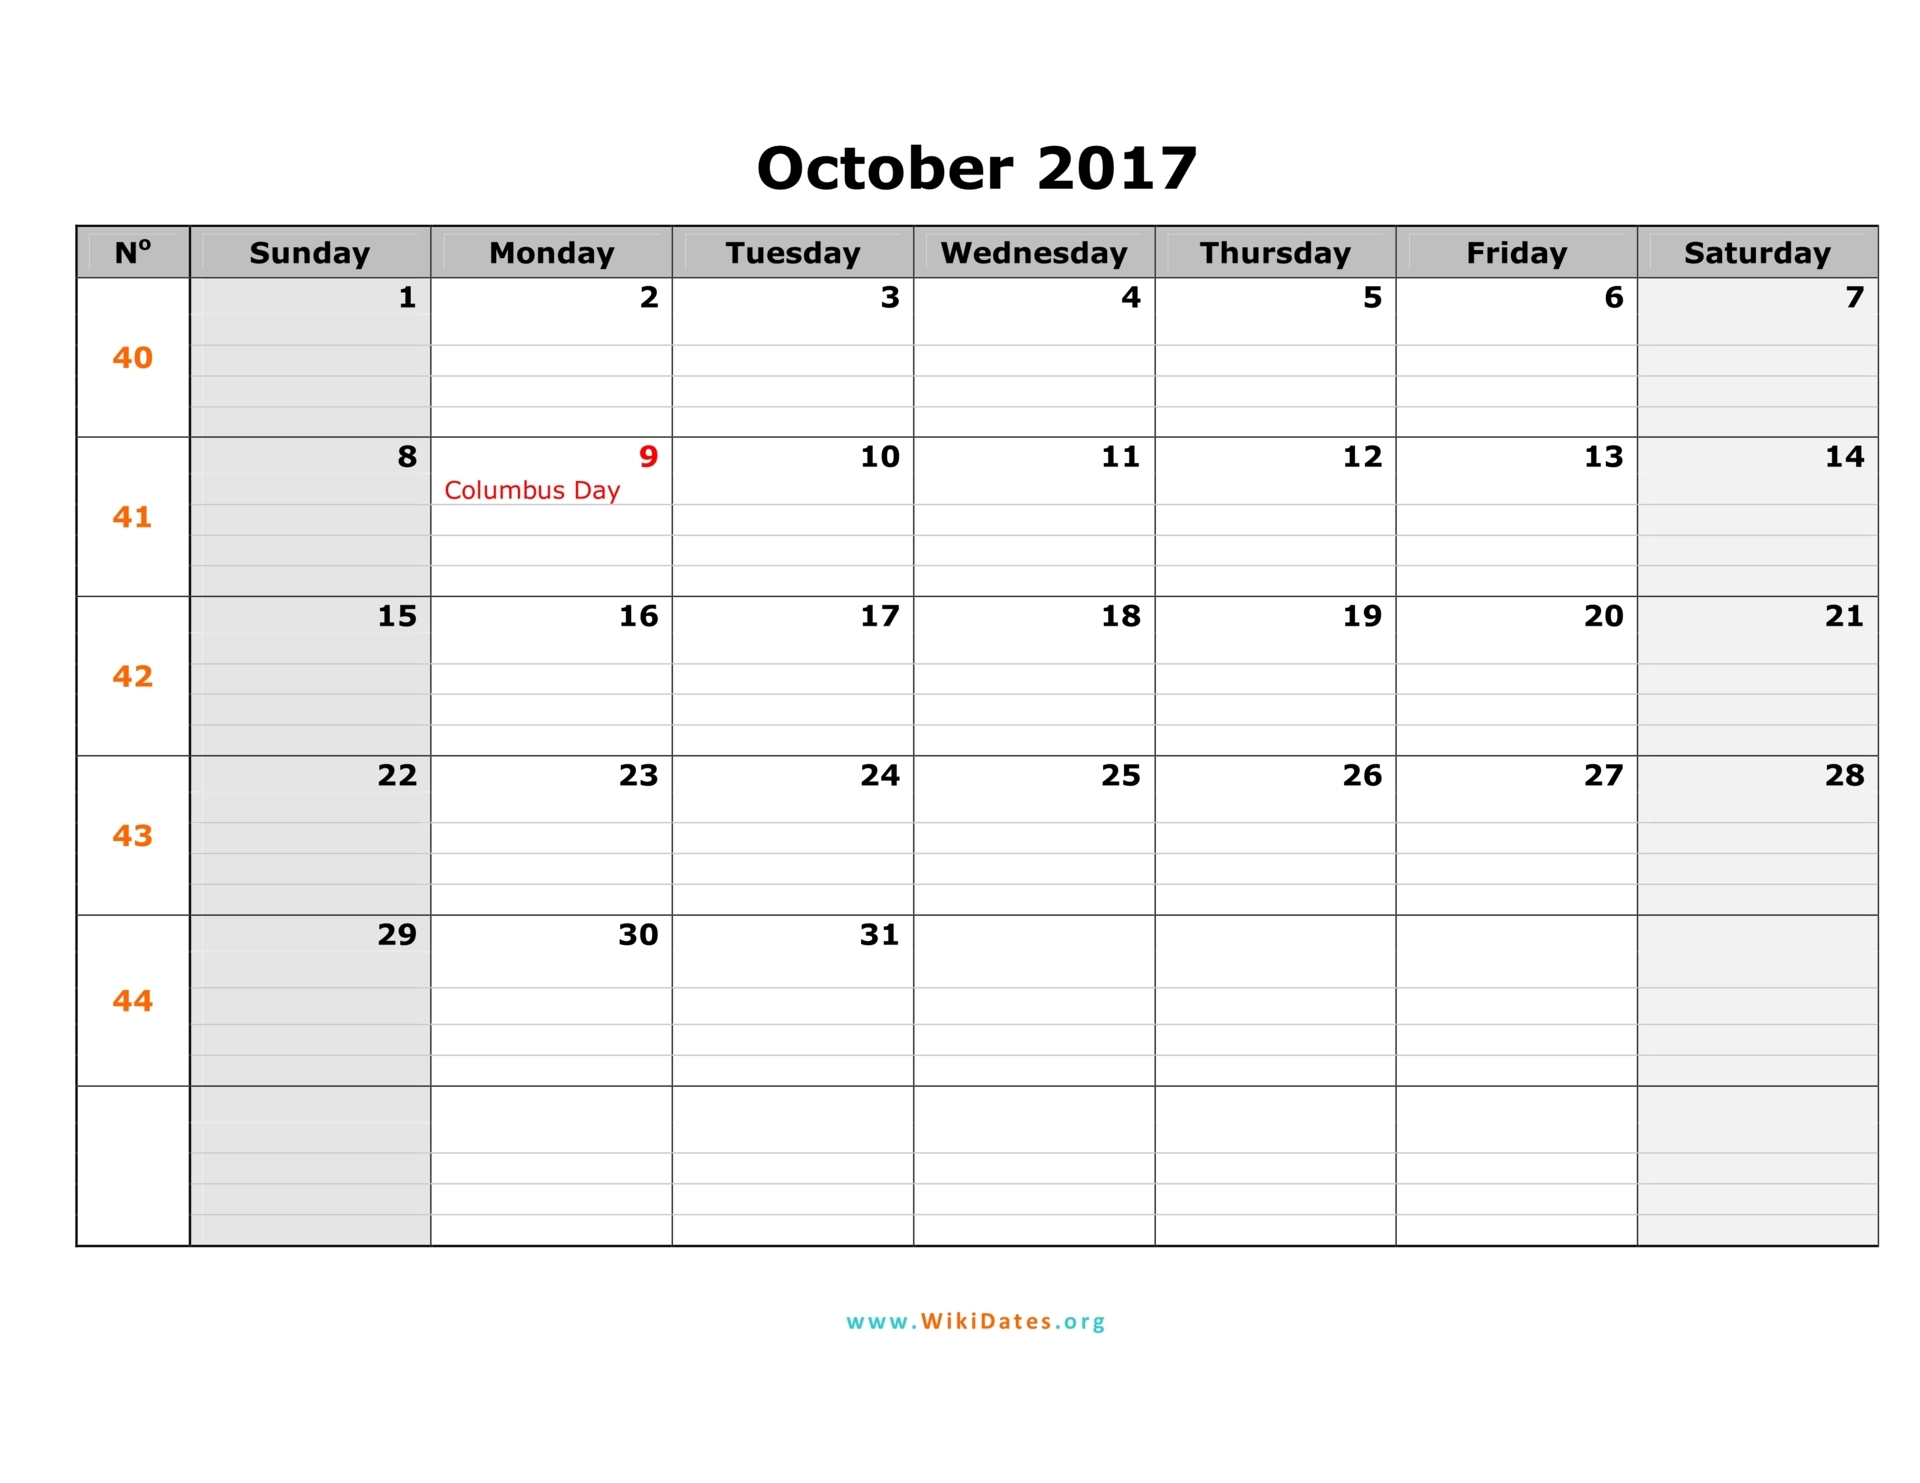 october-2017-calendar-wikidates